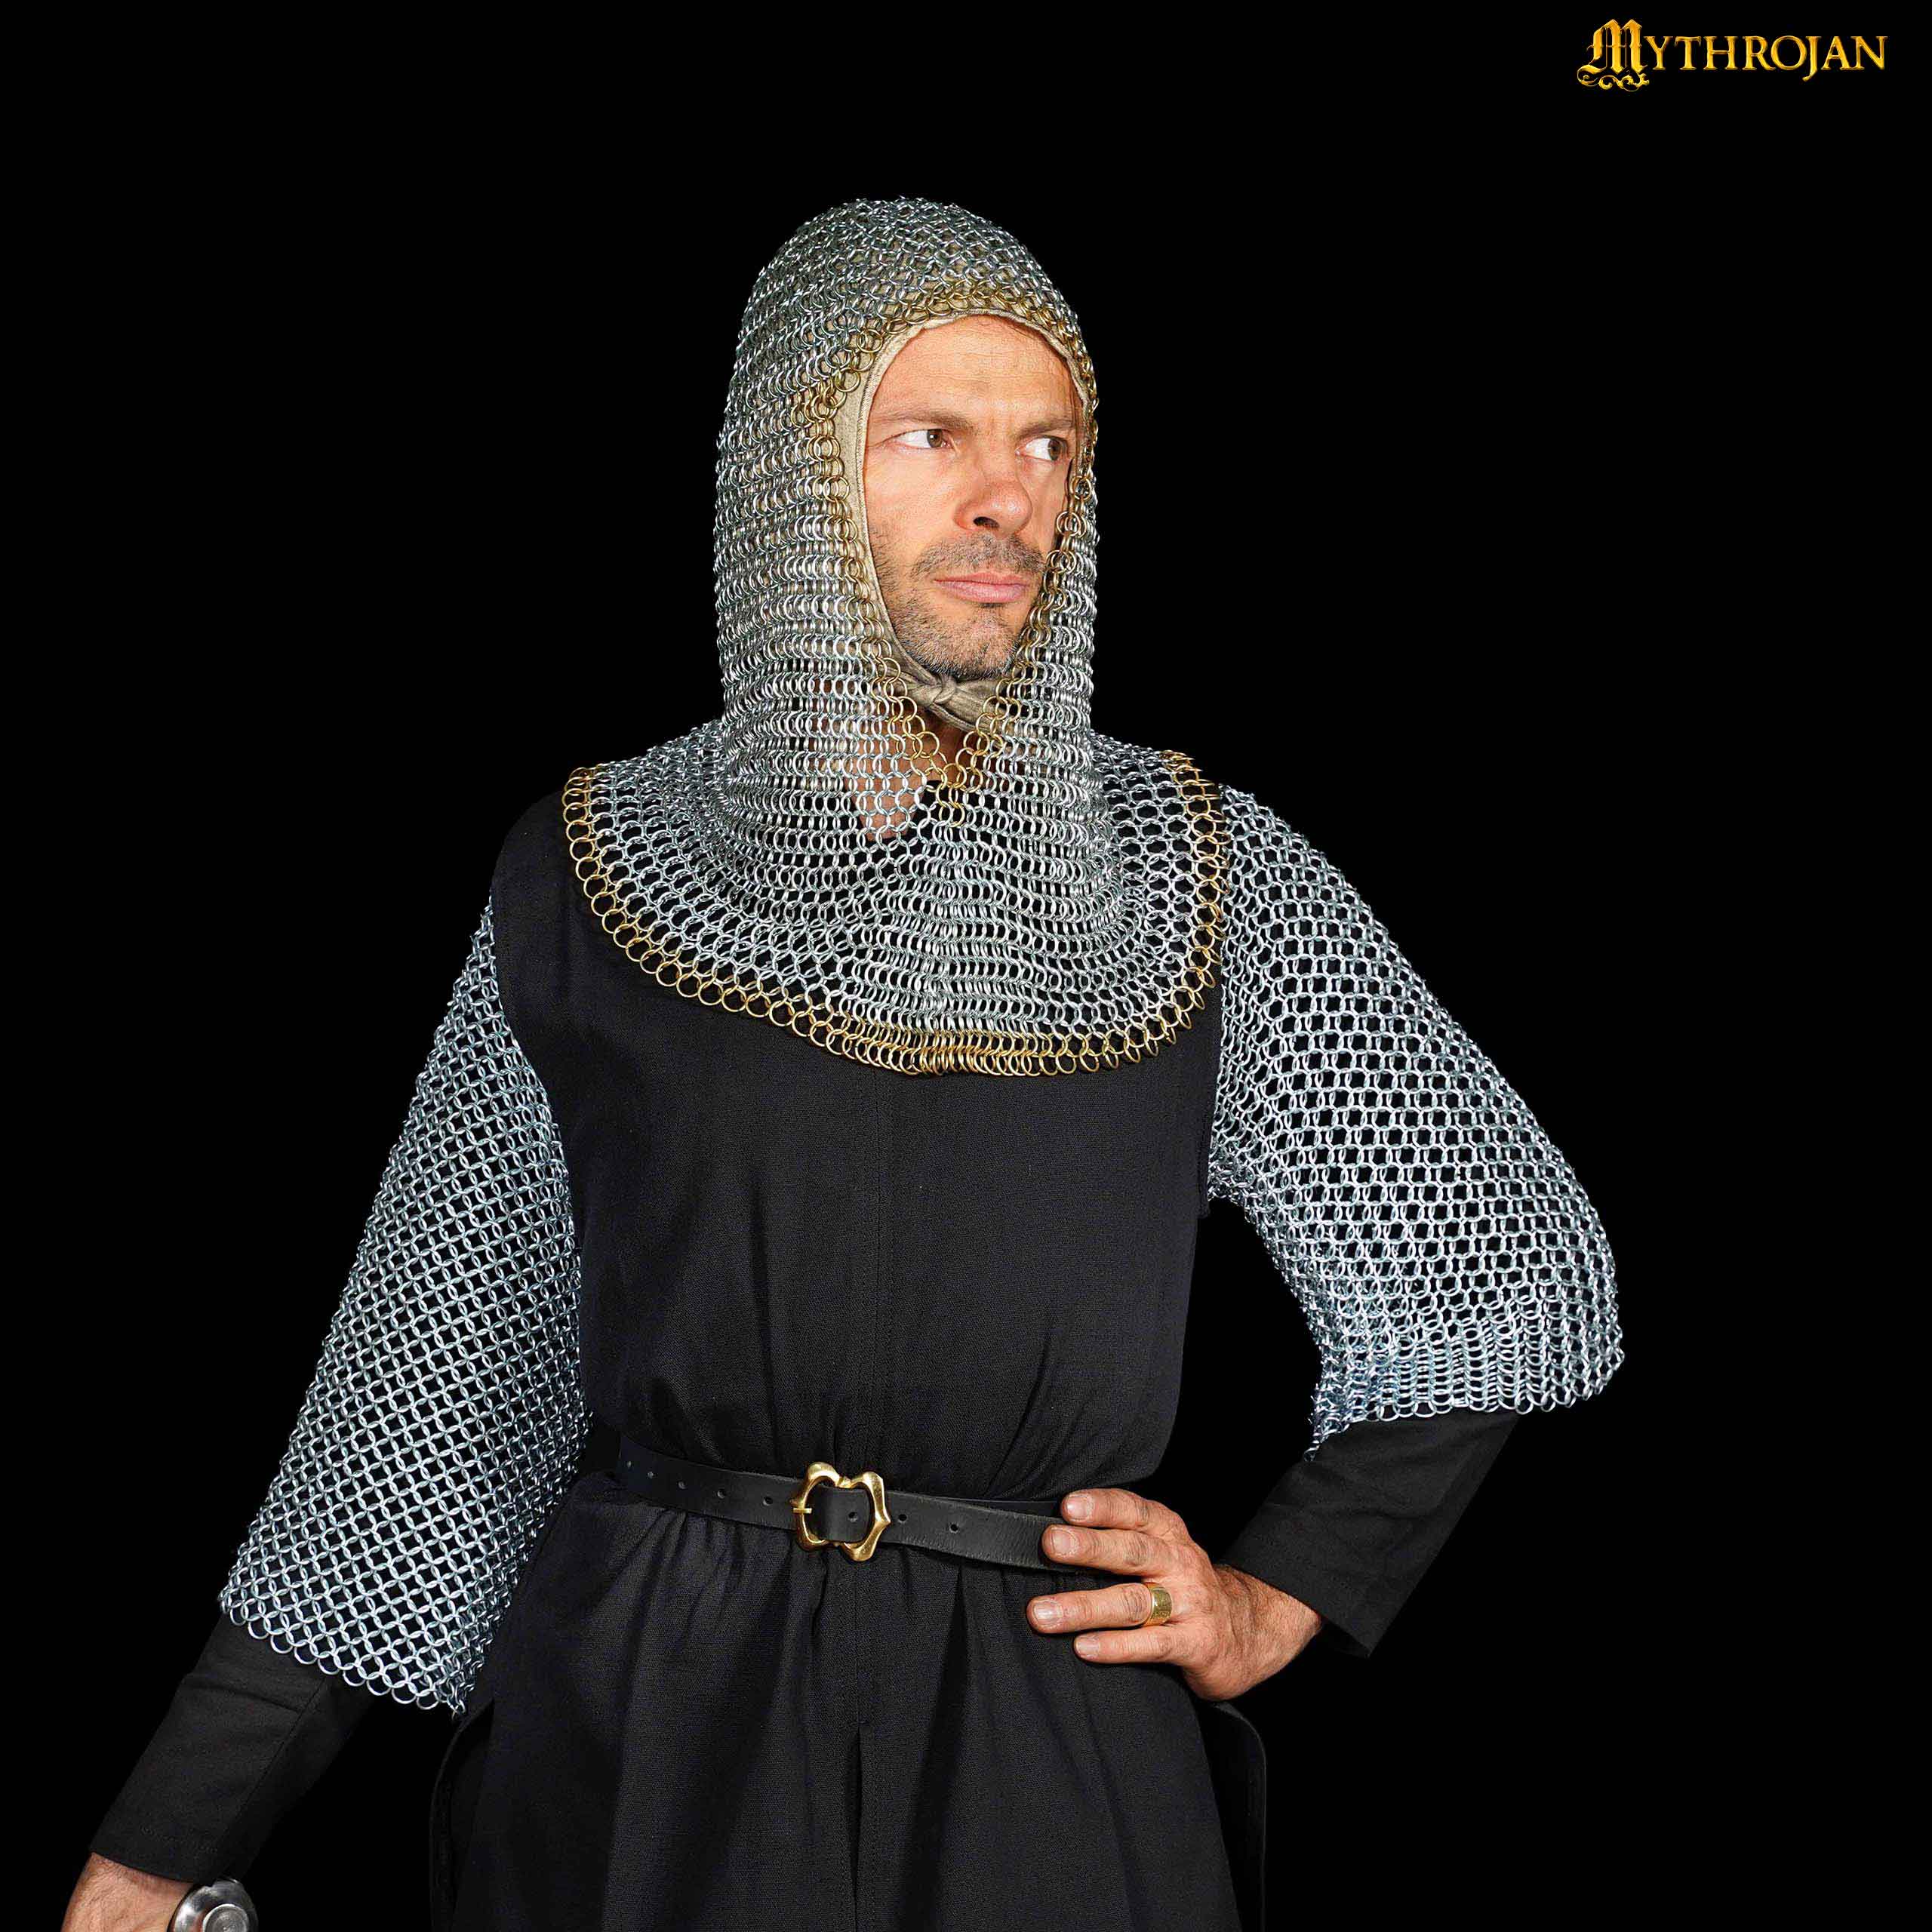 Mythrojan Chainmail Coif Medieval Knight Renaissance Armor Chain Mail Hood Viking LARP 16 Gauge, Men's, Size: Large, Black